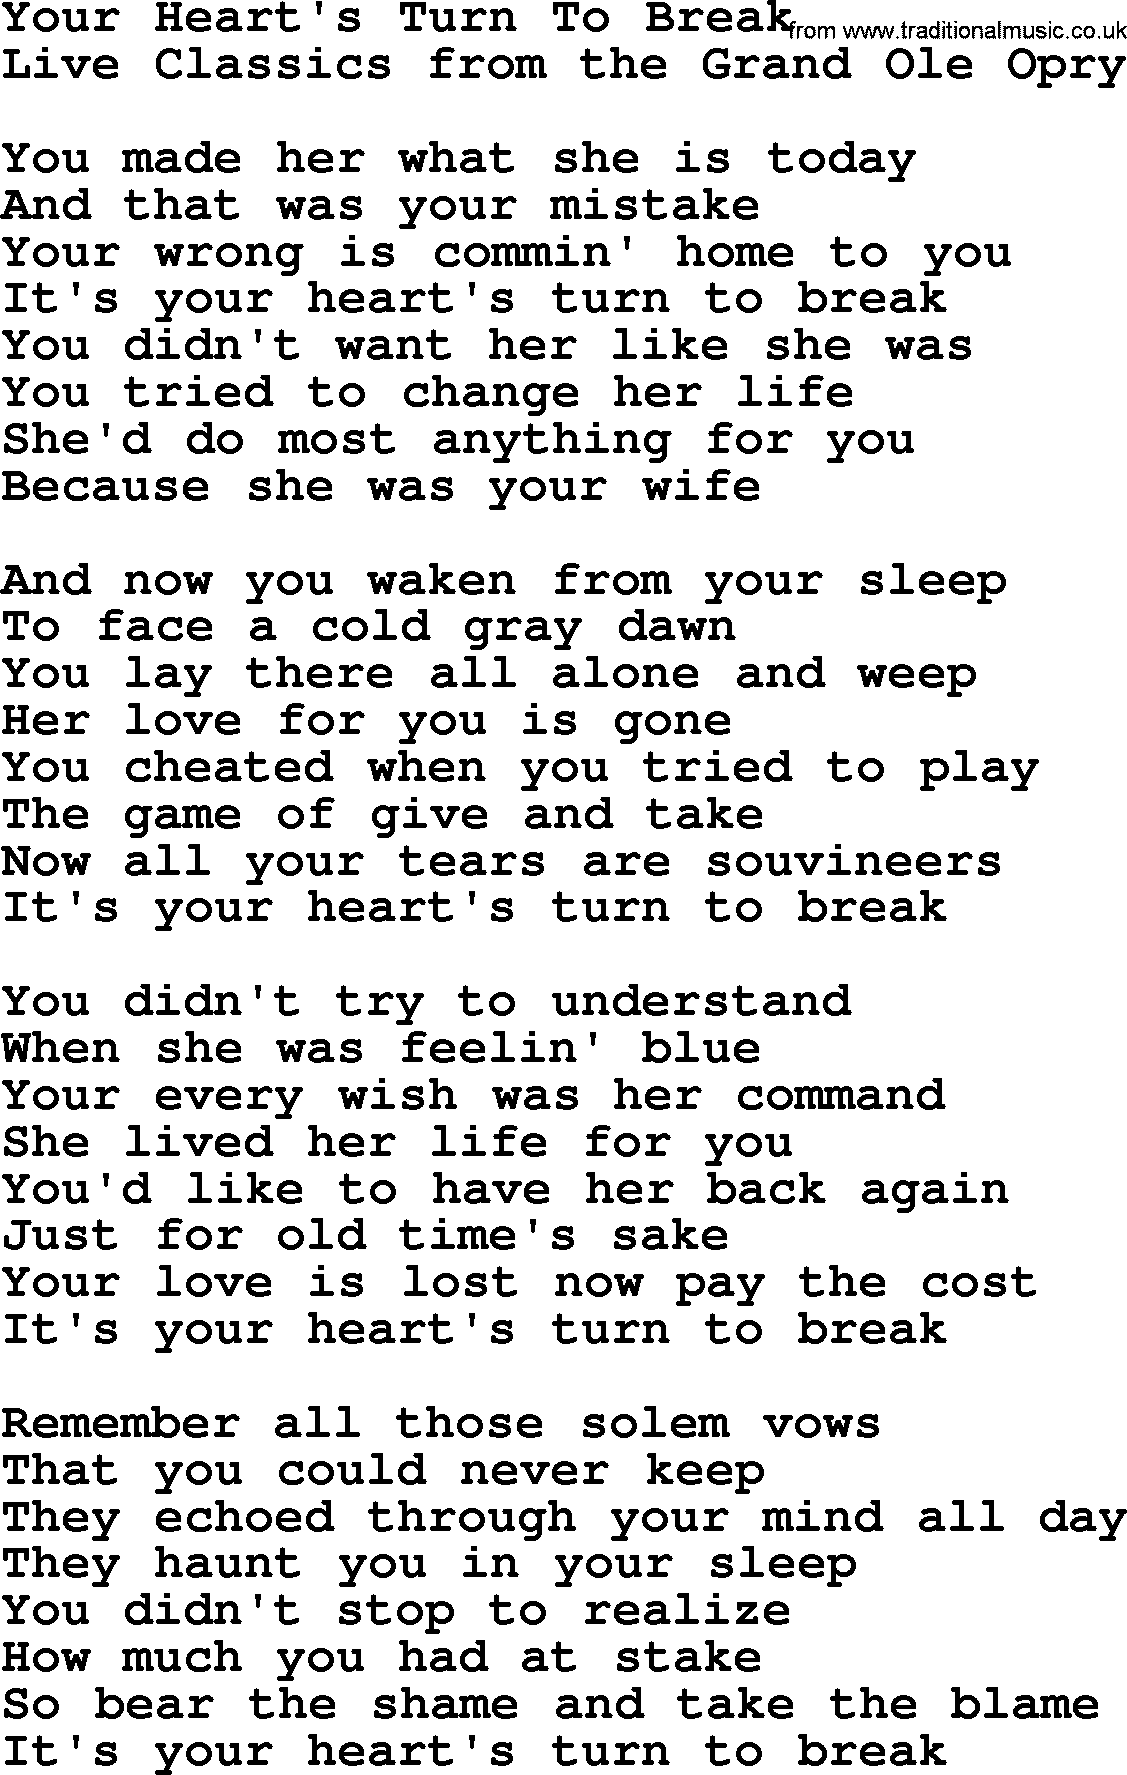 Marty Robbins song: Your Hearts Turn To Break, lyrics